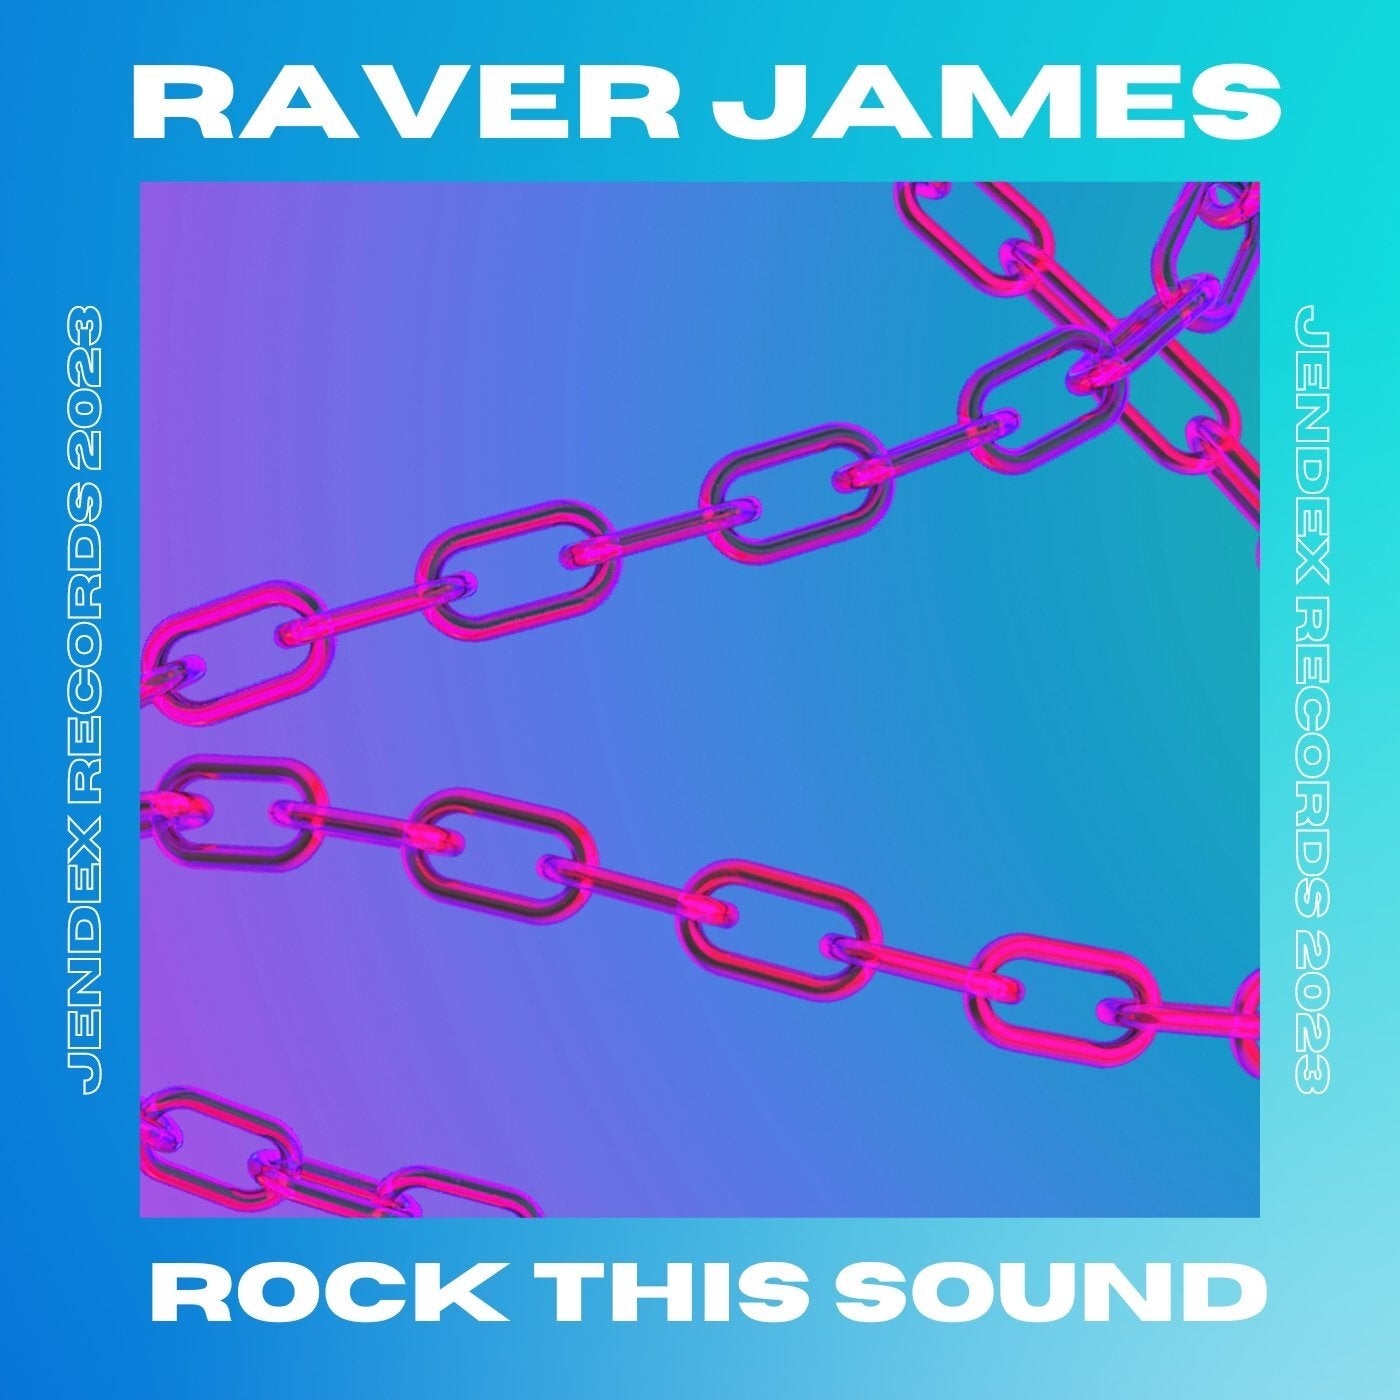 Rock This Sound